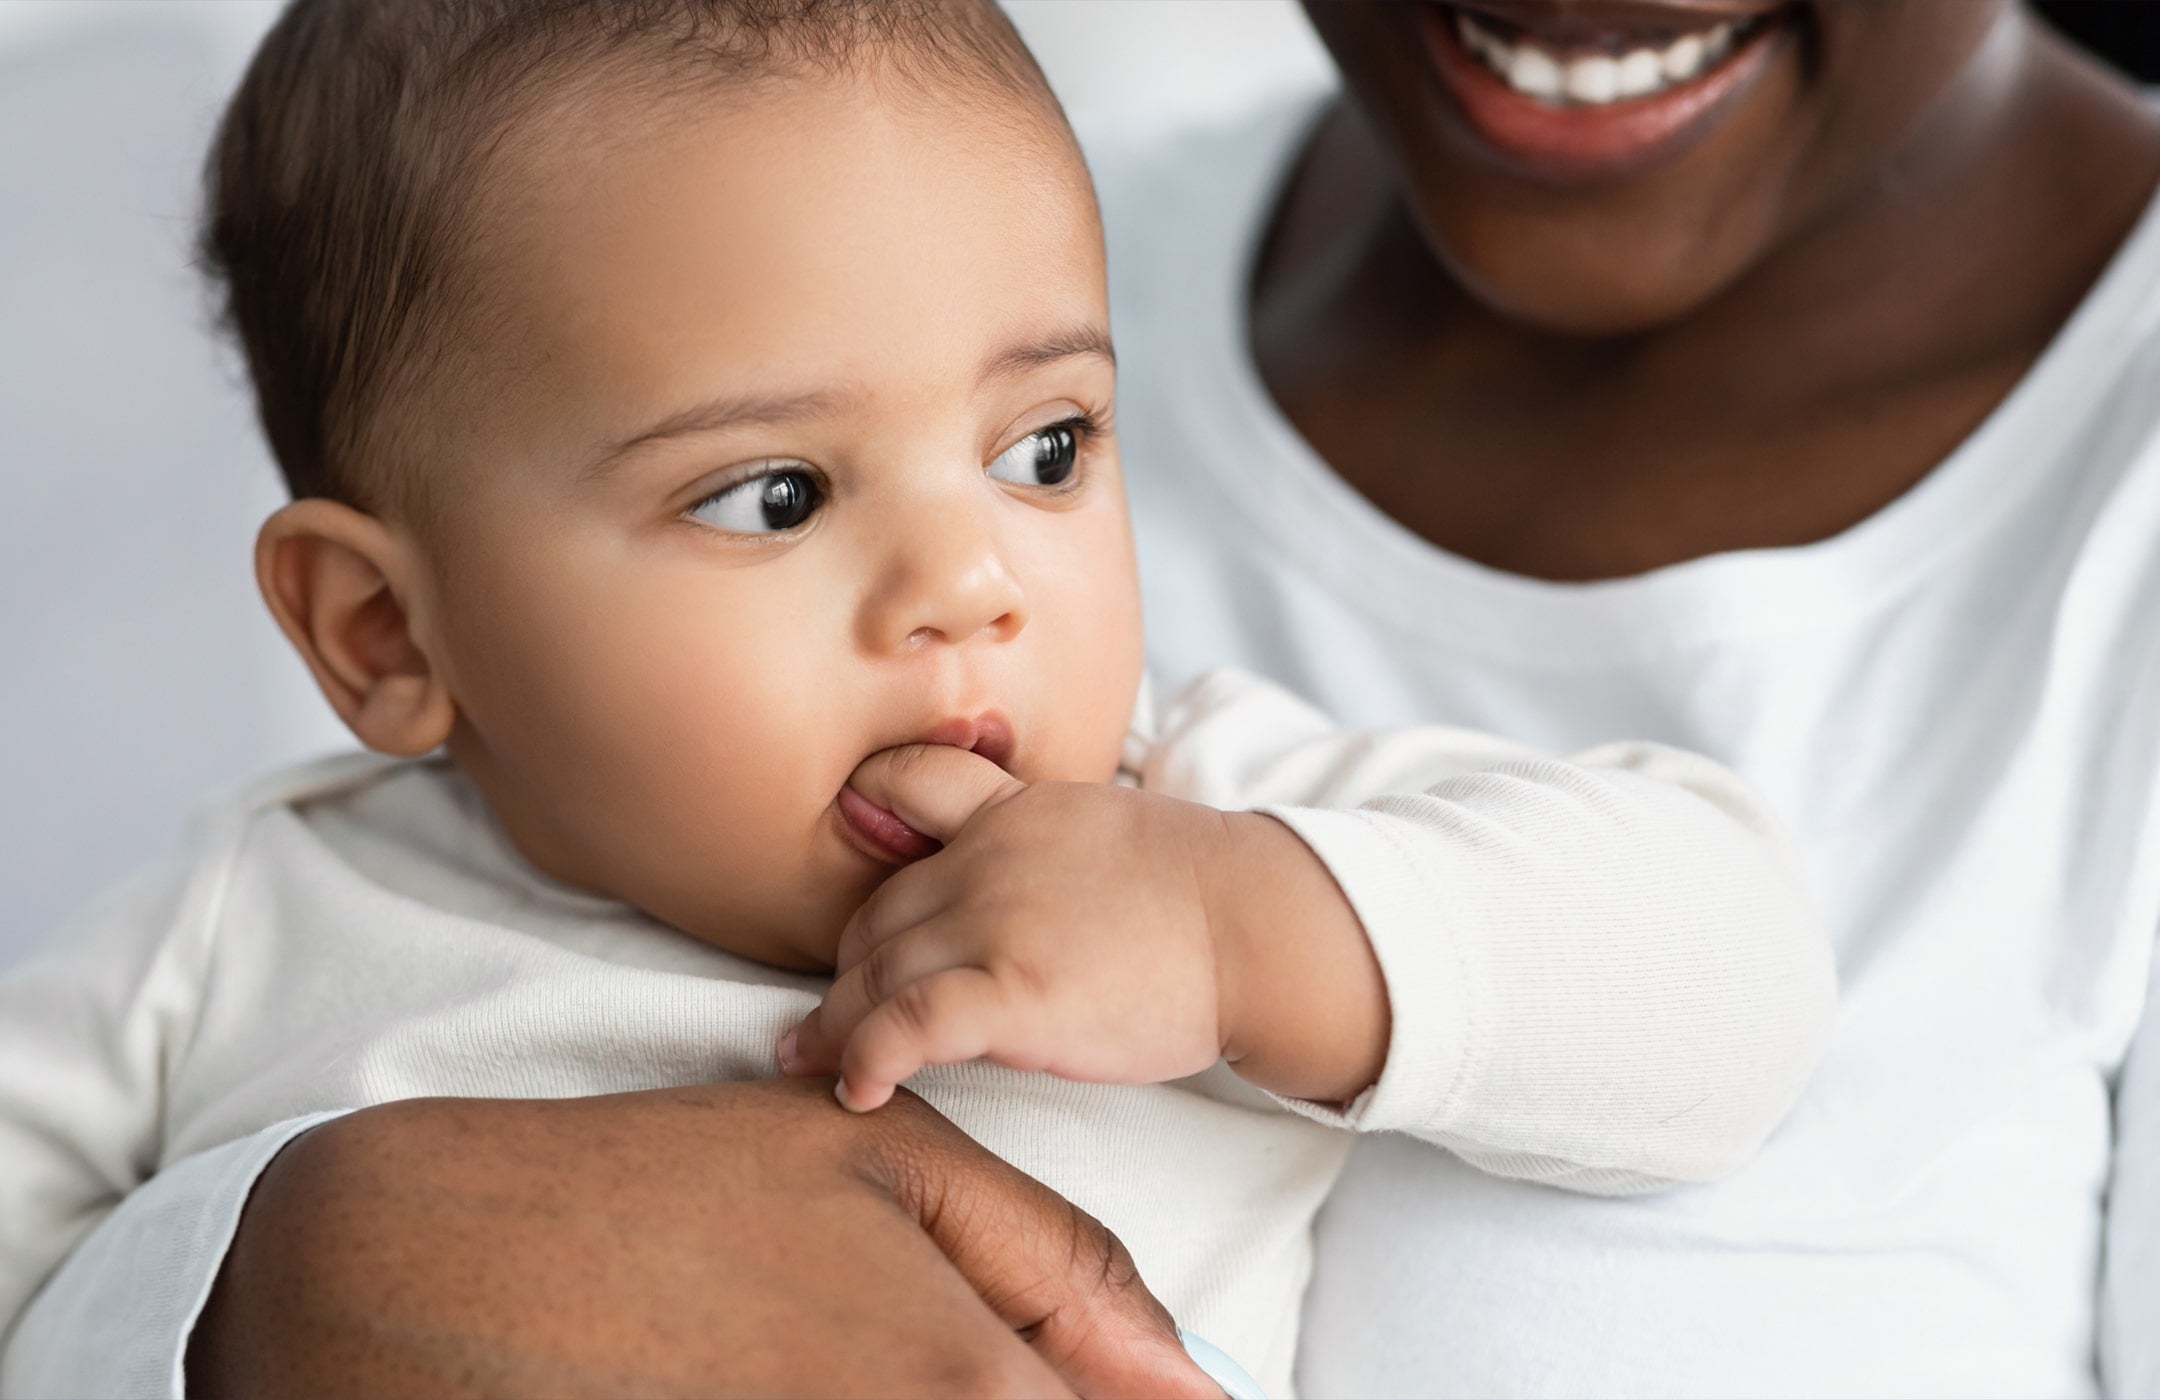 Pediatrician Dr. Playforth Talks Baby Teething & Home Remedies